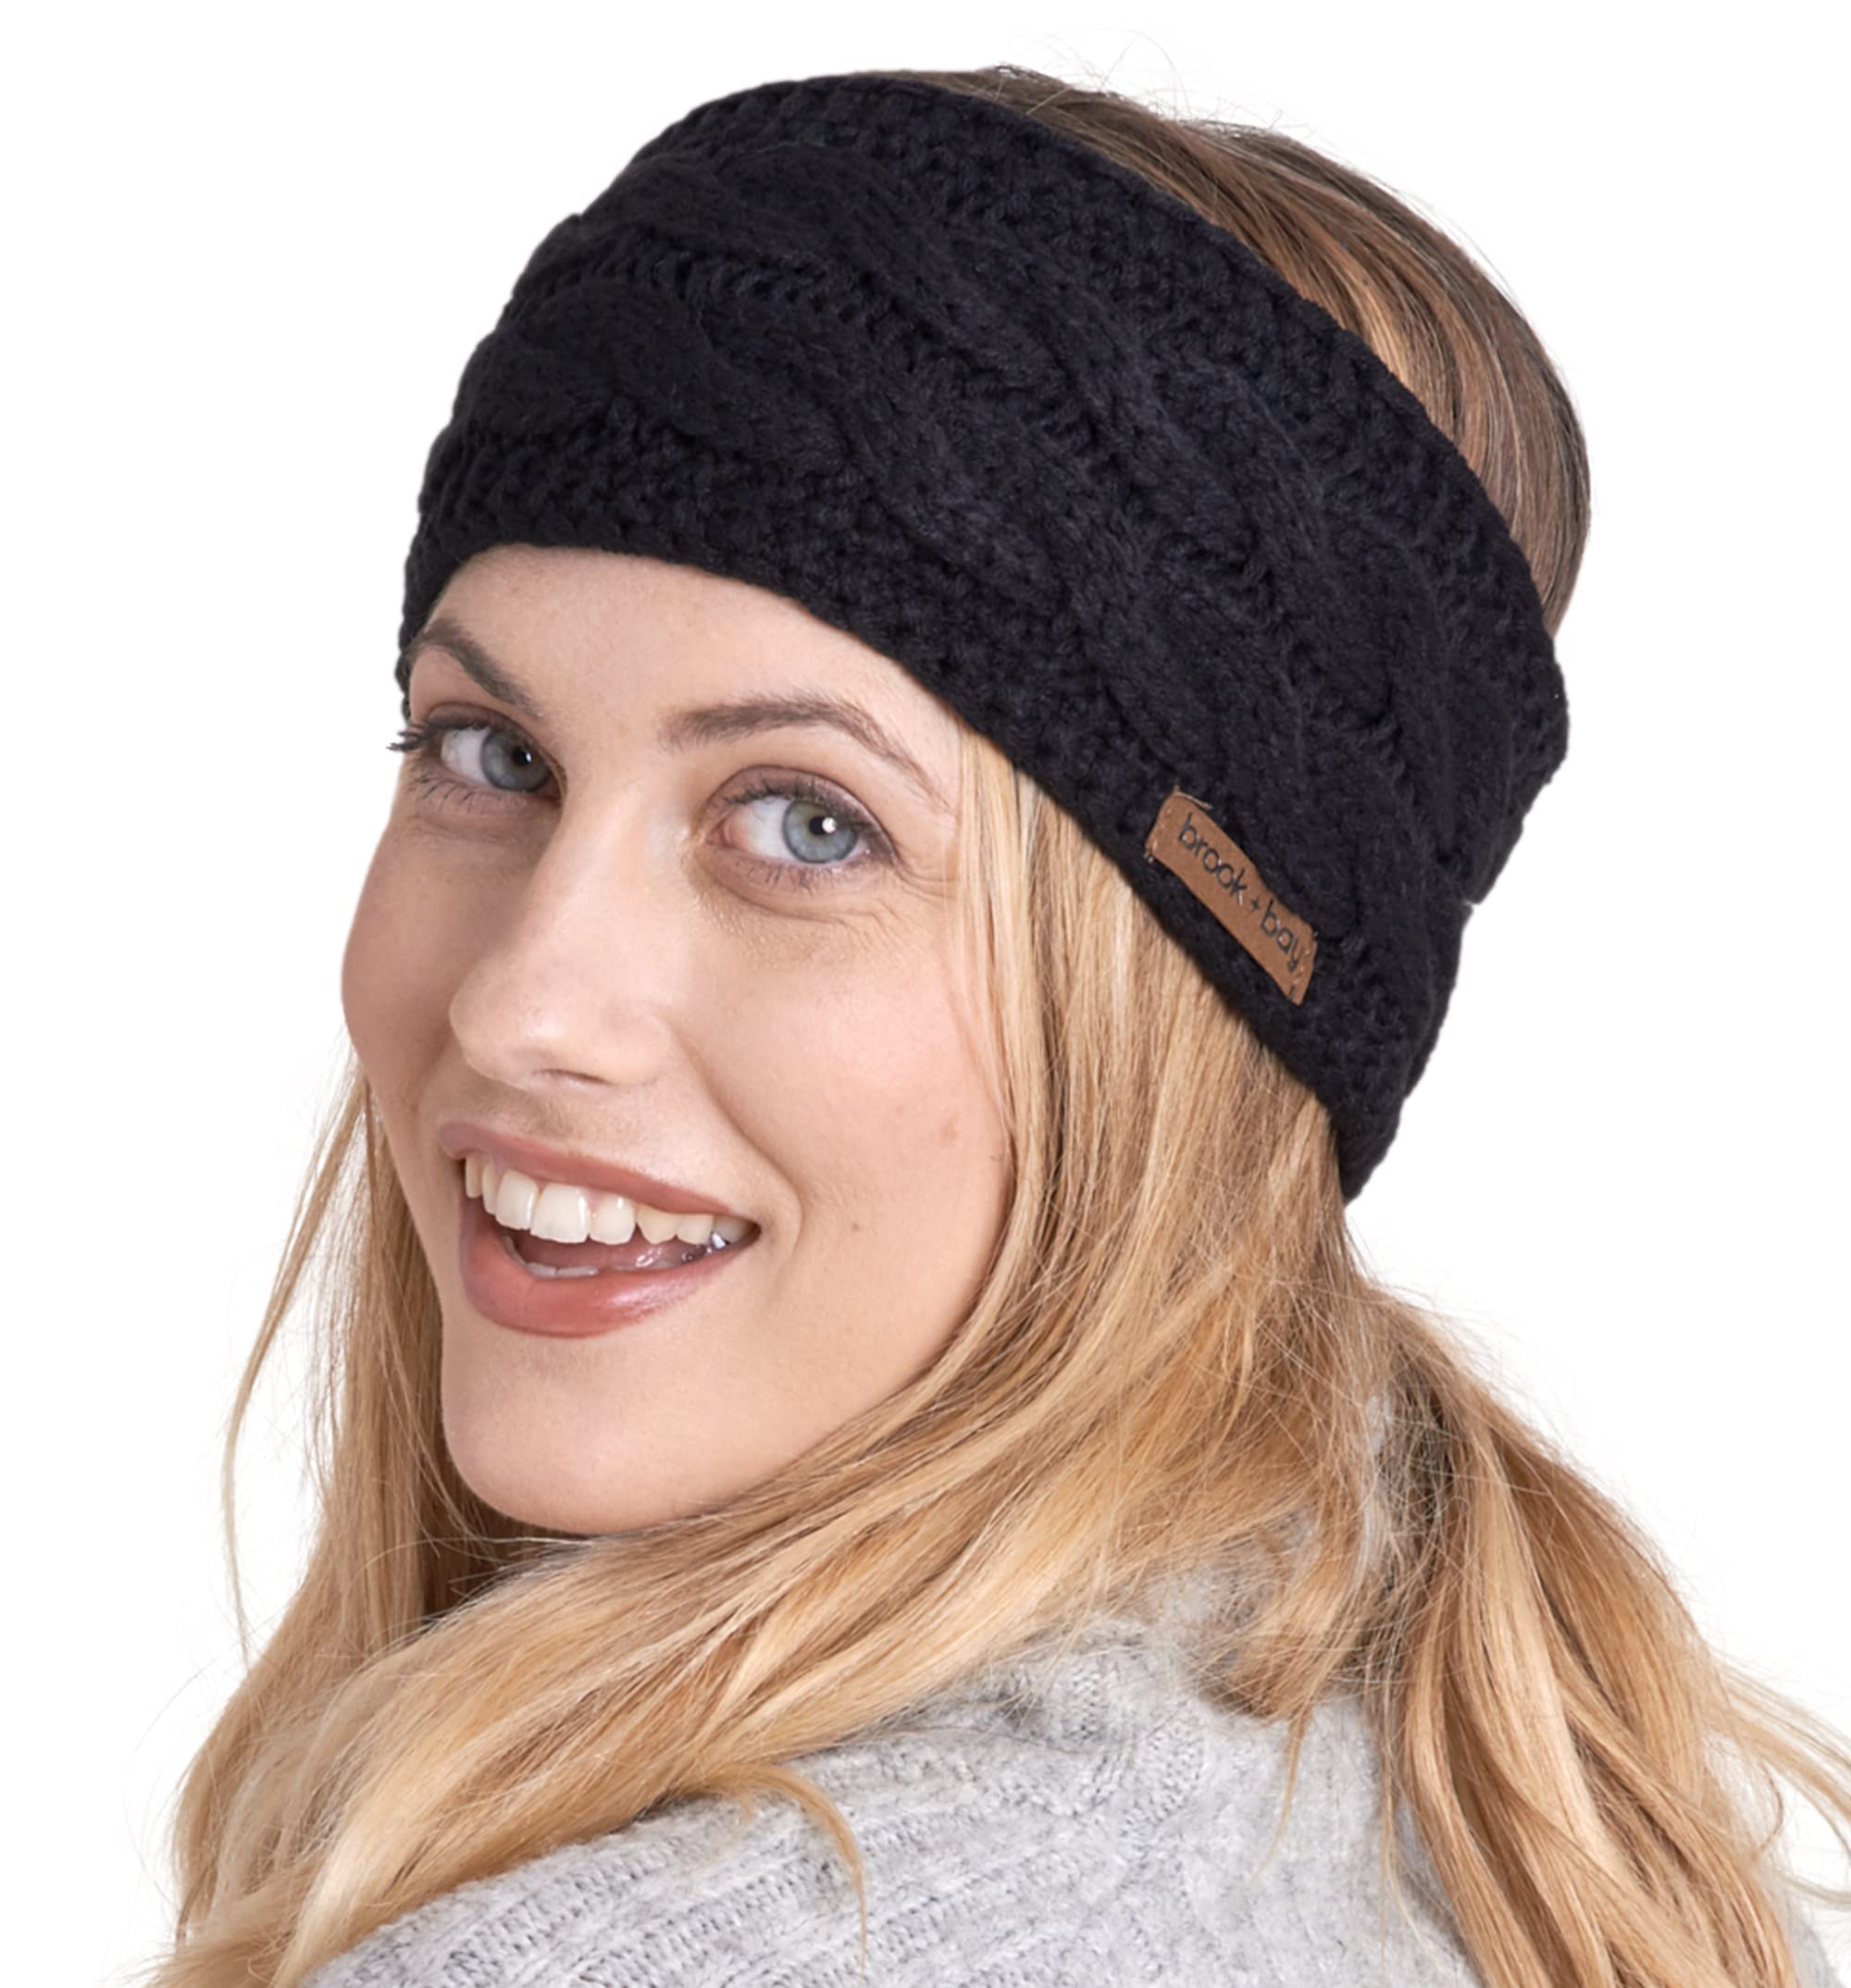 Brook + Bay Womens Winter Ear Warmer Headband - Fleece Lined Cable